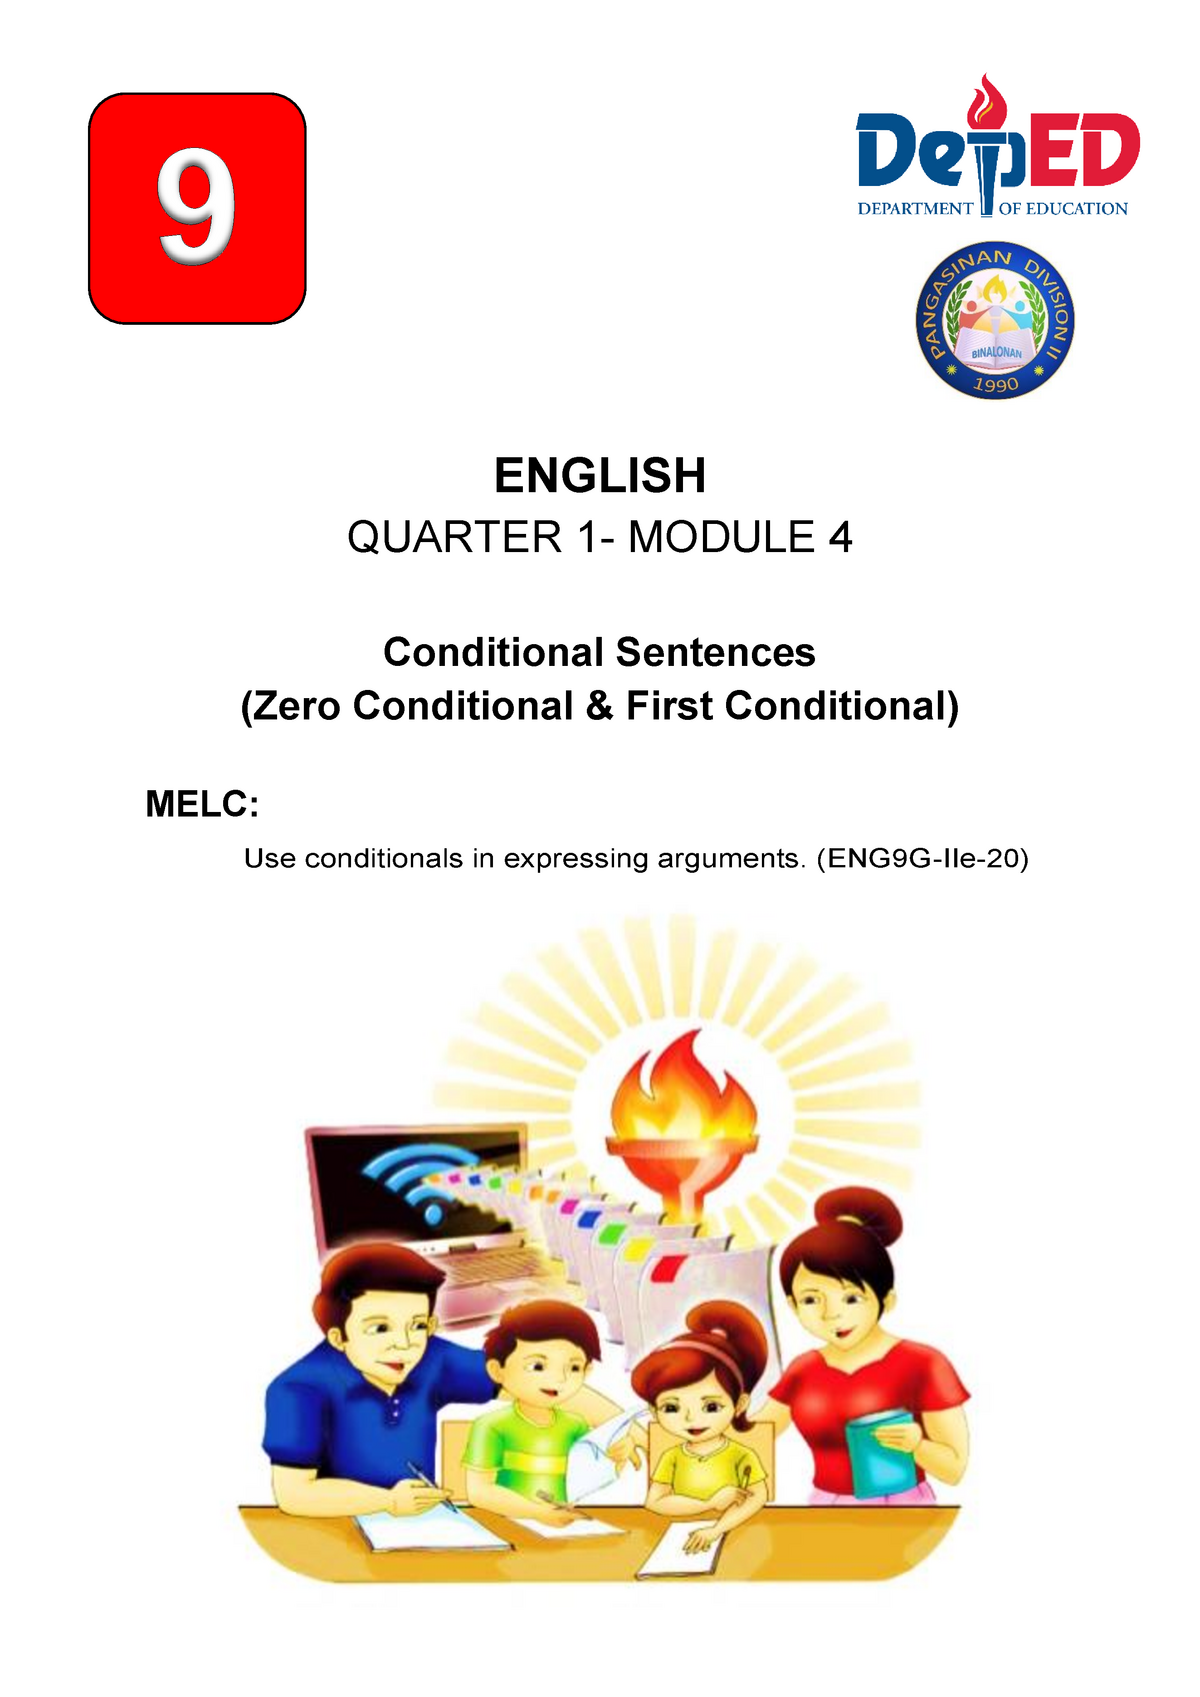 English 9 Quarter 1 Module 4 English Quarter 1 Module 4 Conditional Sentences Zero 3274